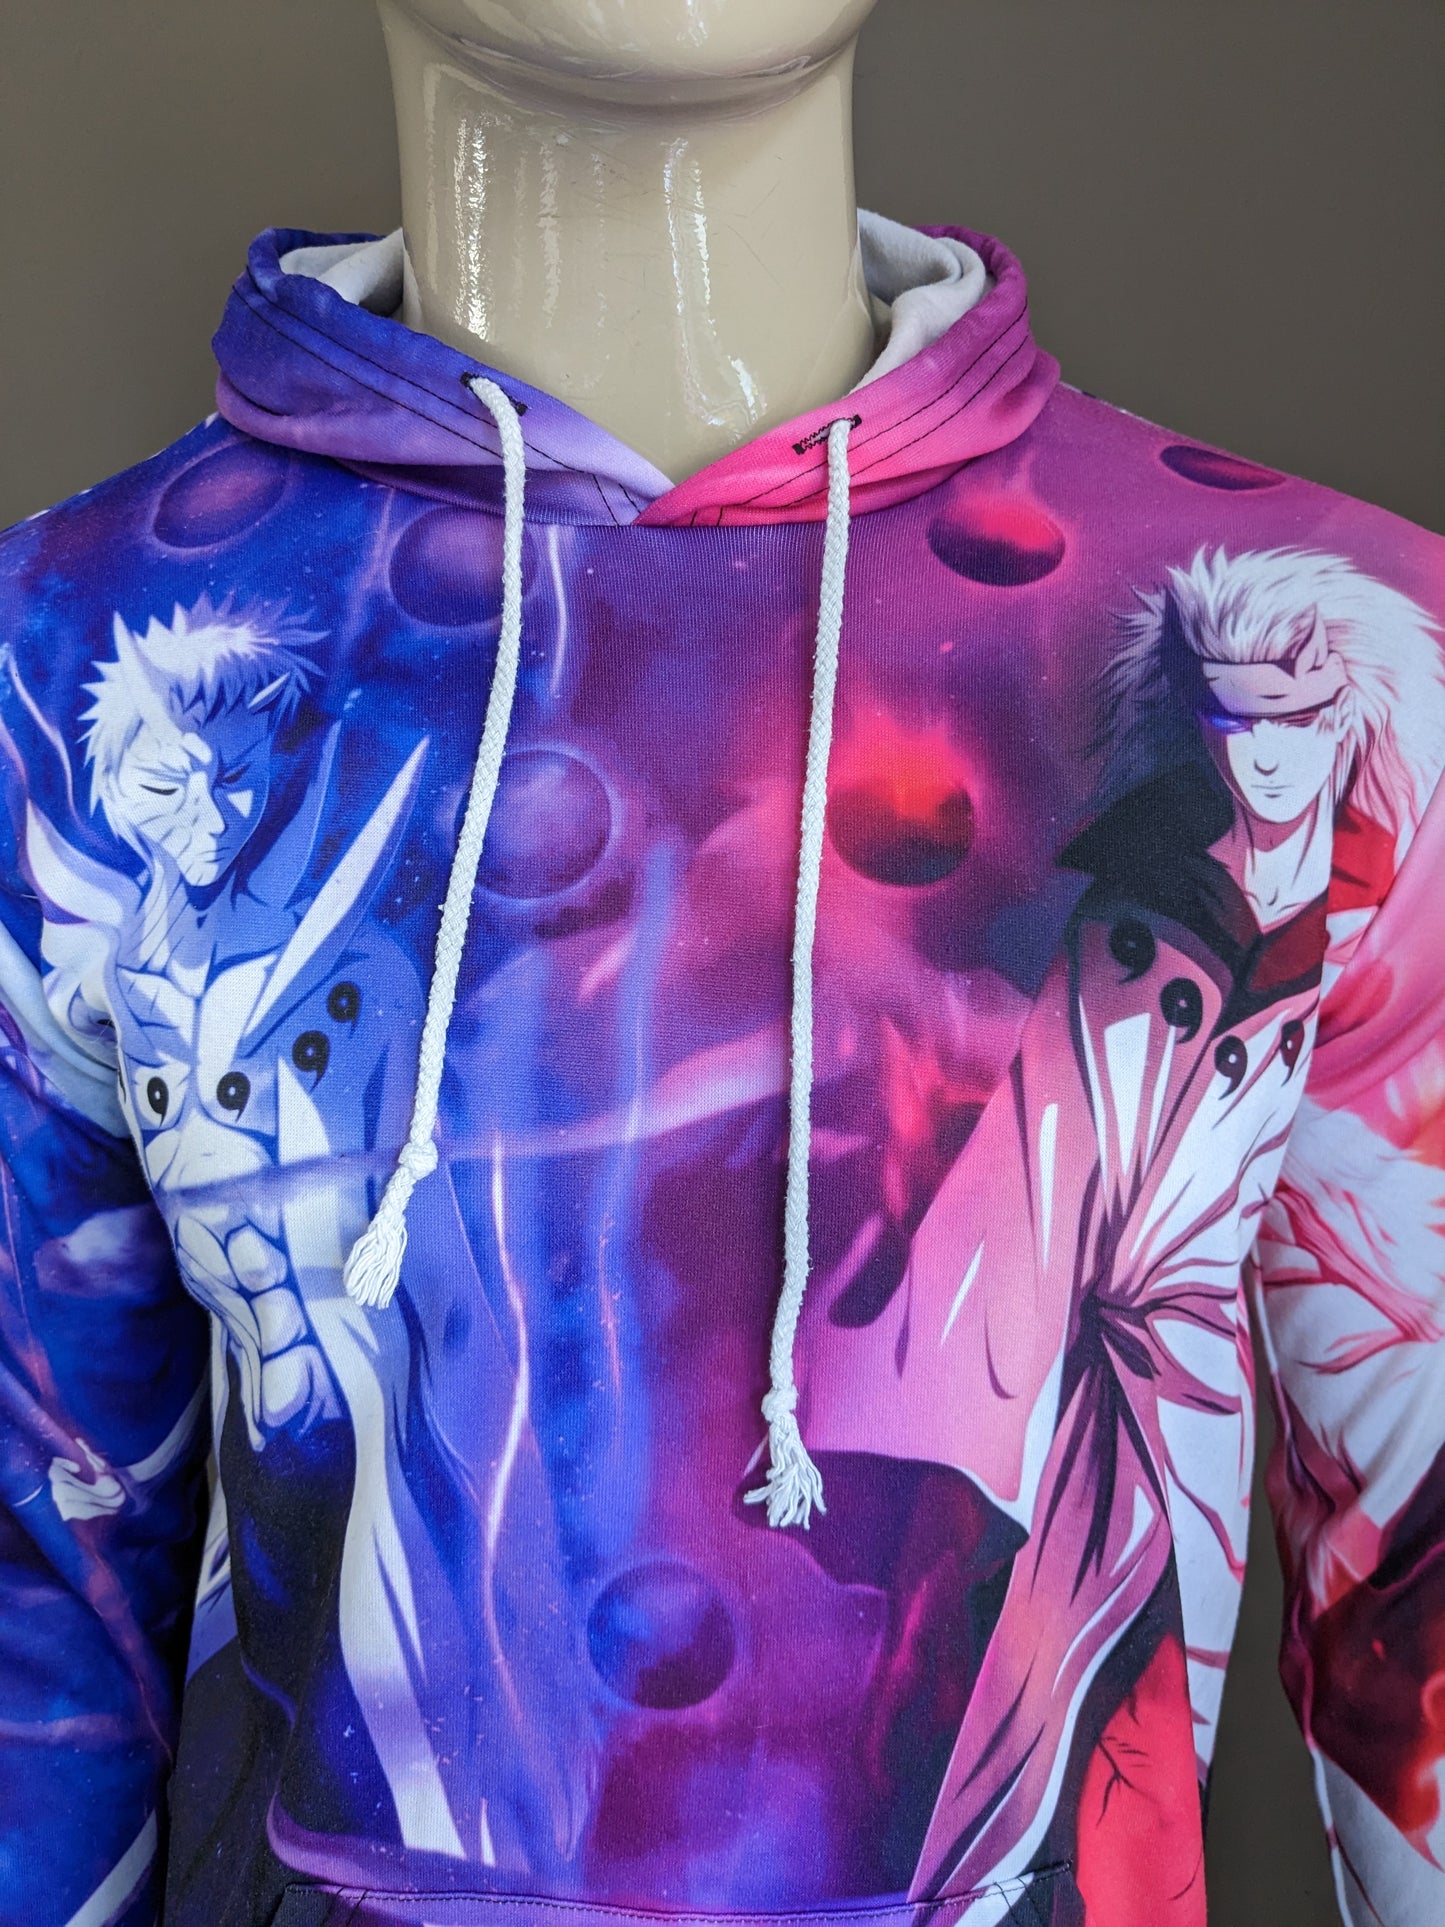 Manga / anime hoodie. Pink purple colored. Size M.